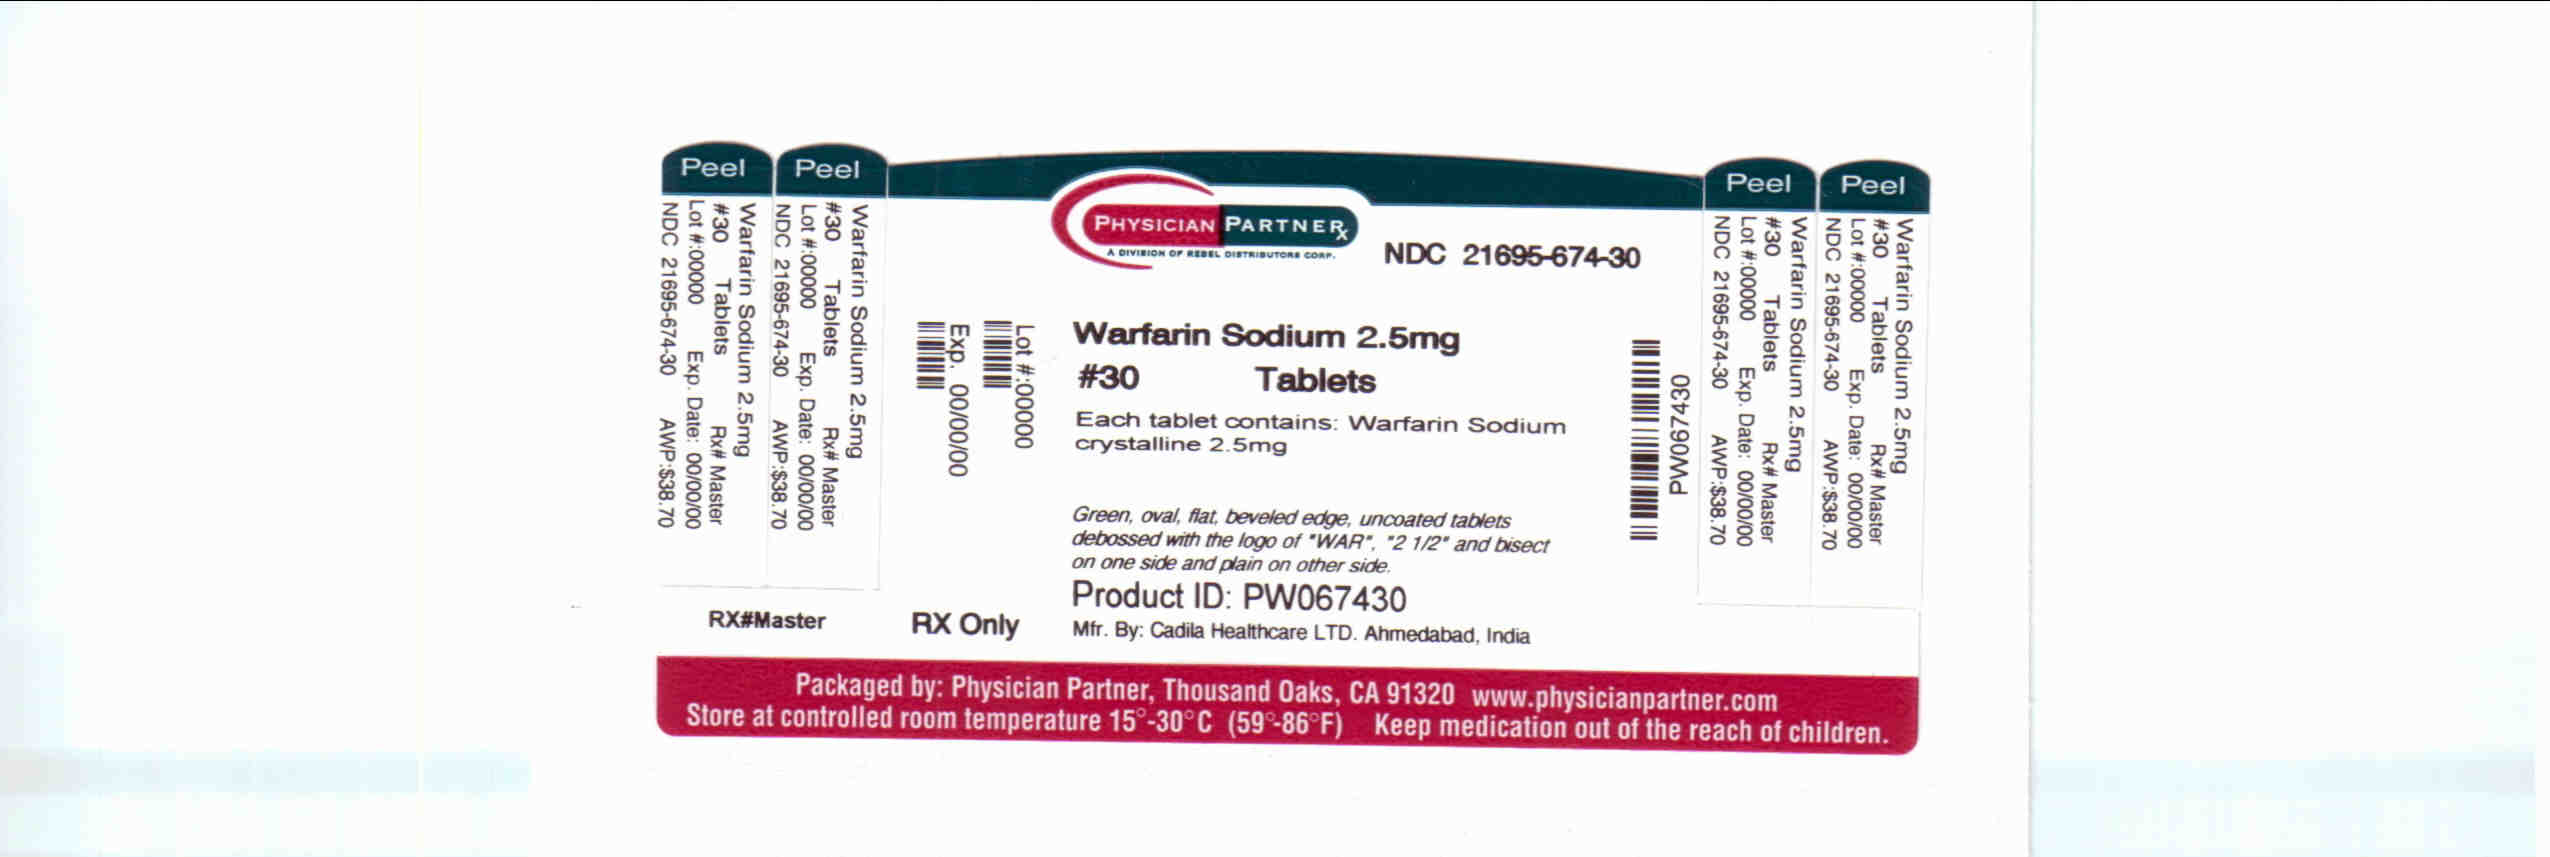 Warfarin Sodium 2.5mg